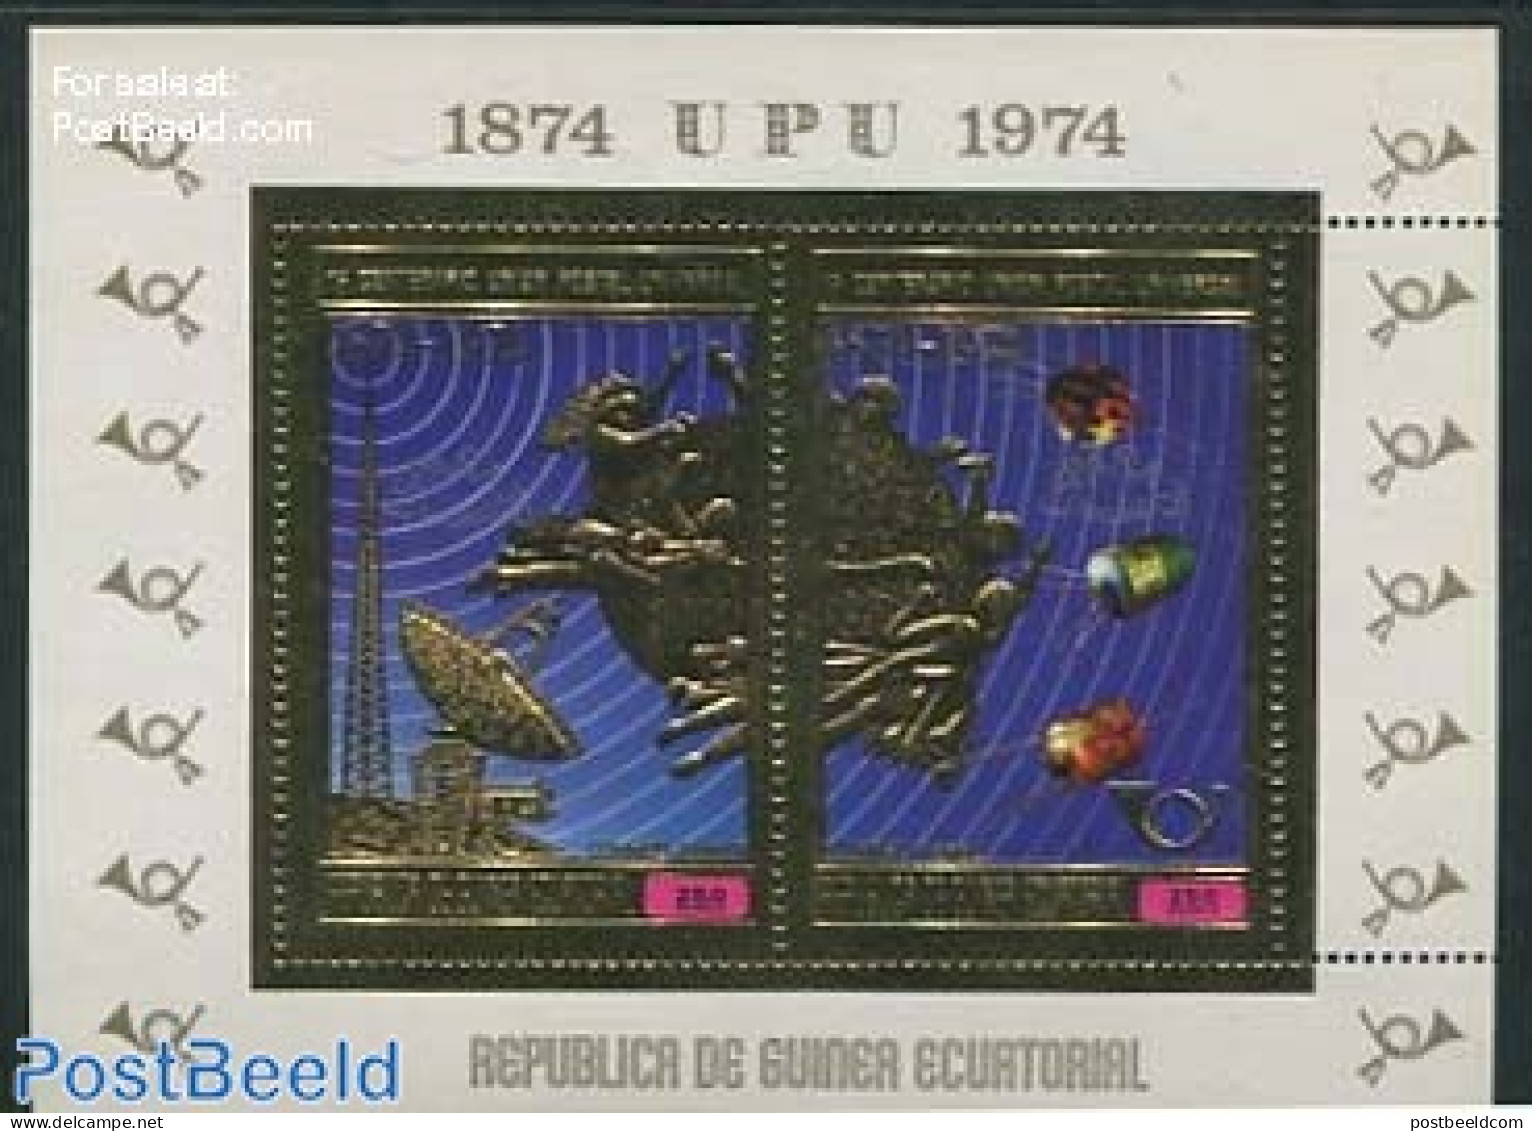 Equatorial Guinea 1974 UPU/ESPANA S/s, Mint NH, Science - Transport - Telecommunication - U.P.U. - Space Exploration - Telekom